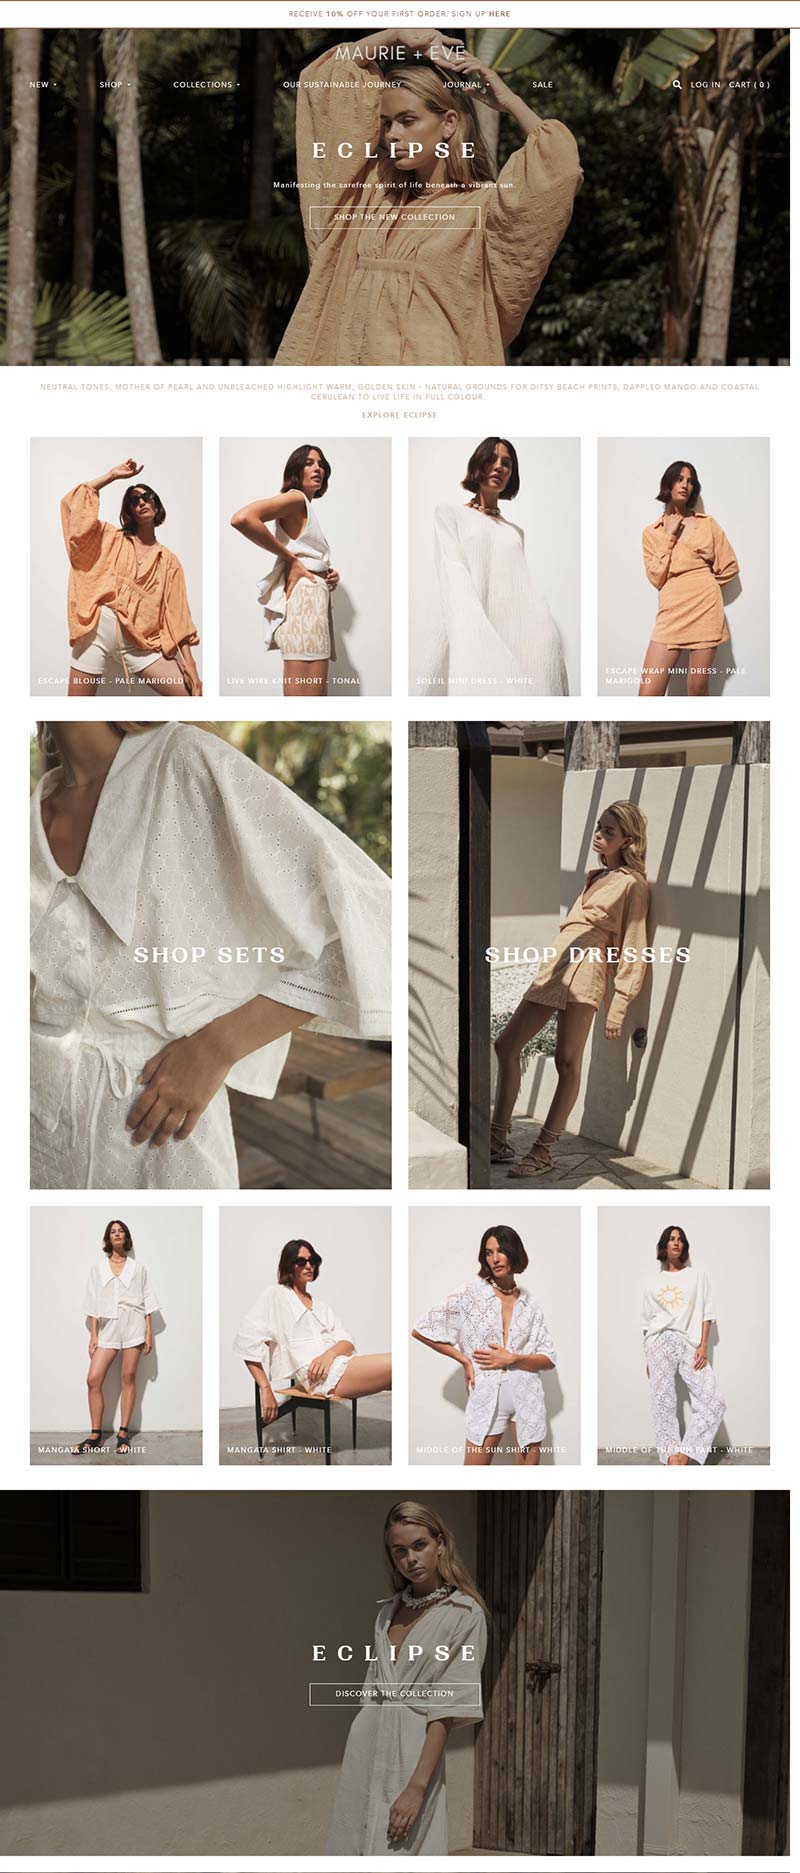 MAURIE + EVE 澳大利亚简约女装品牌购物网站